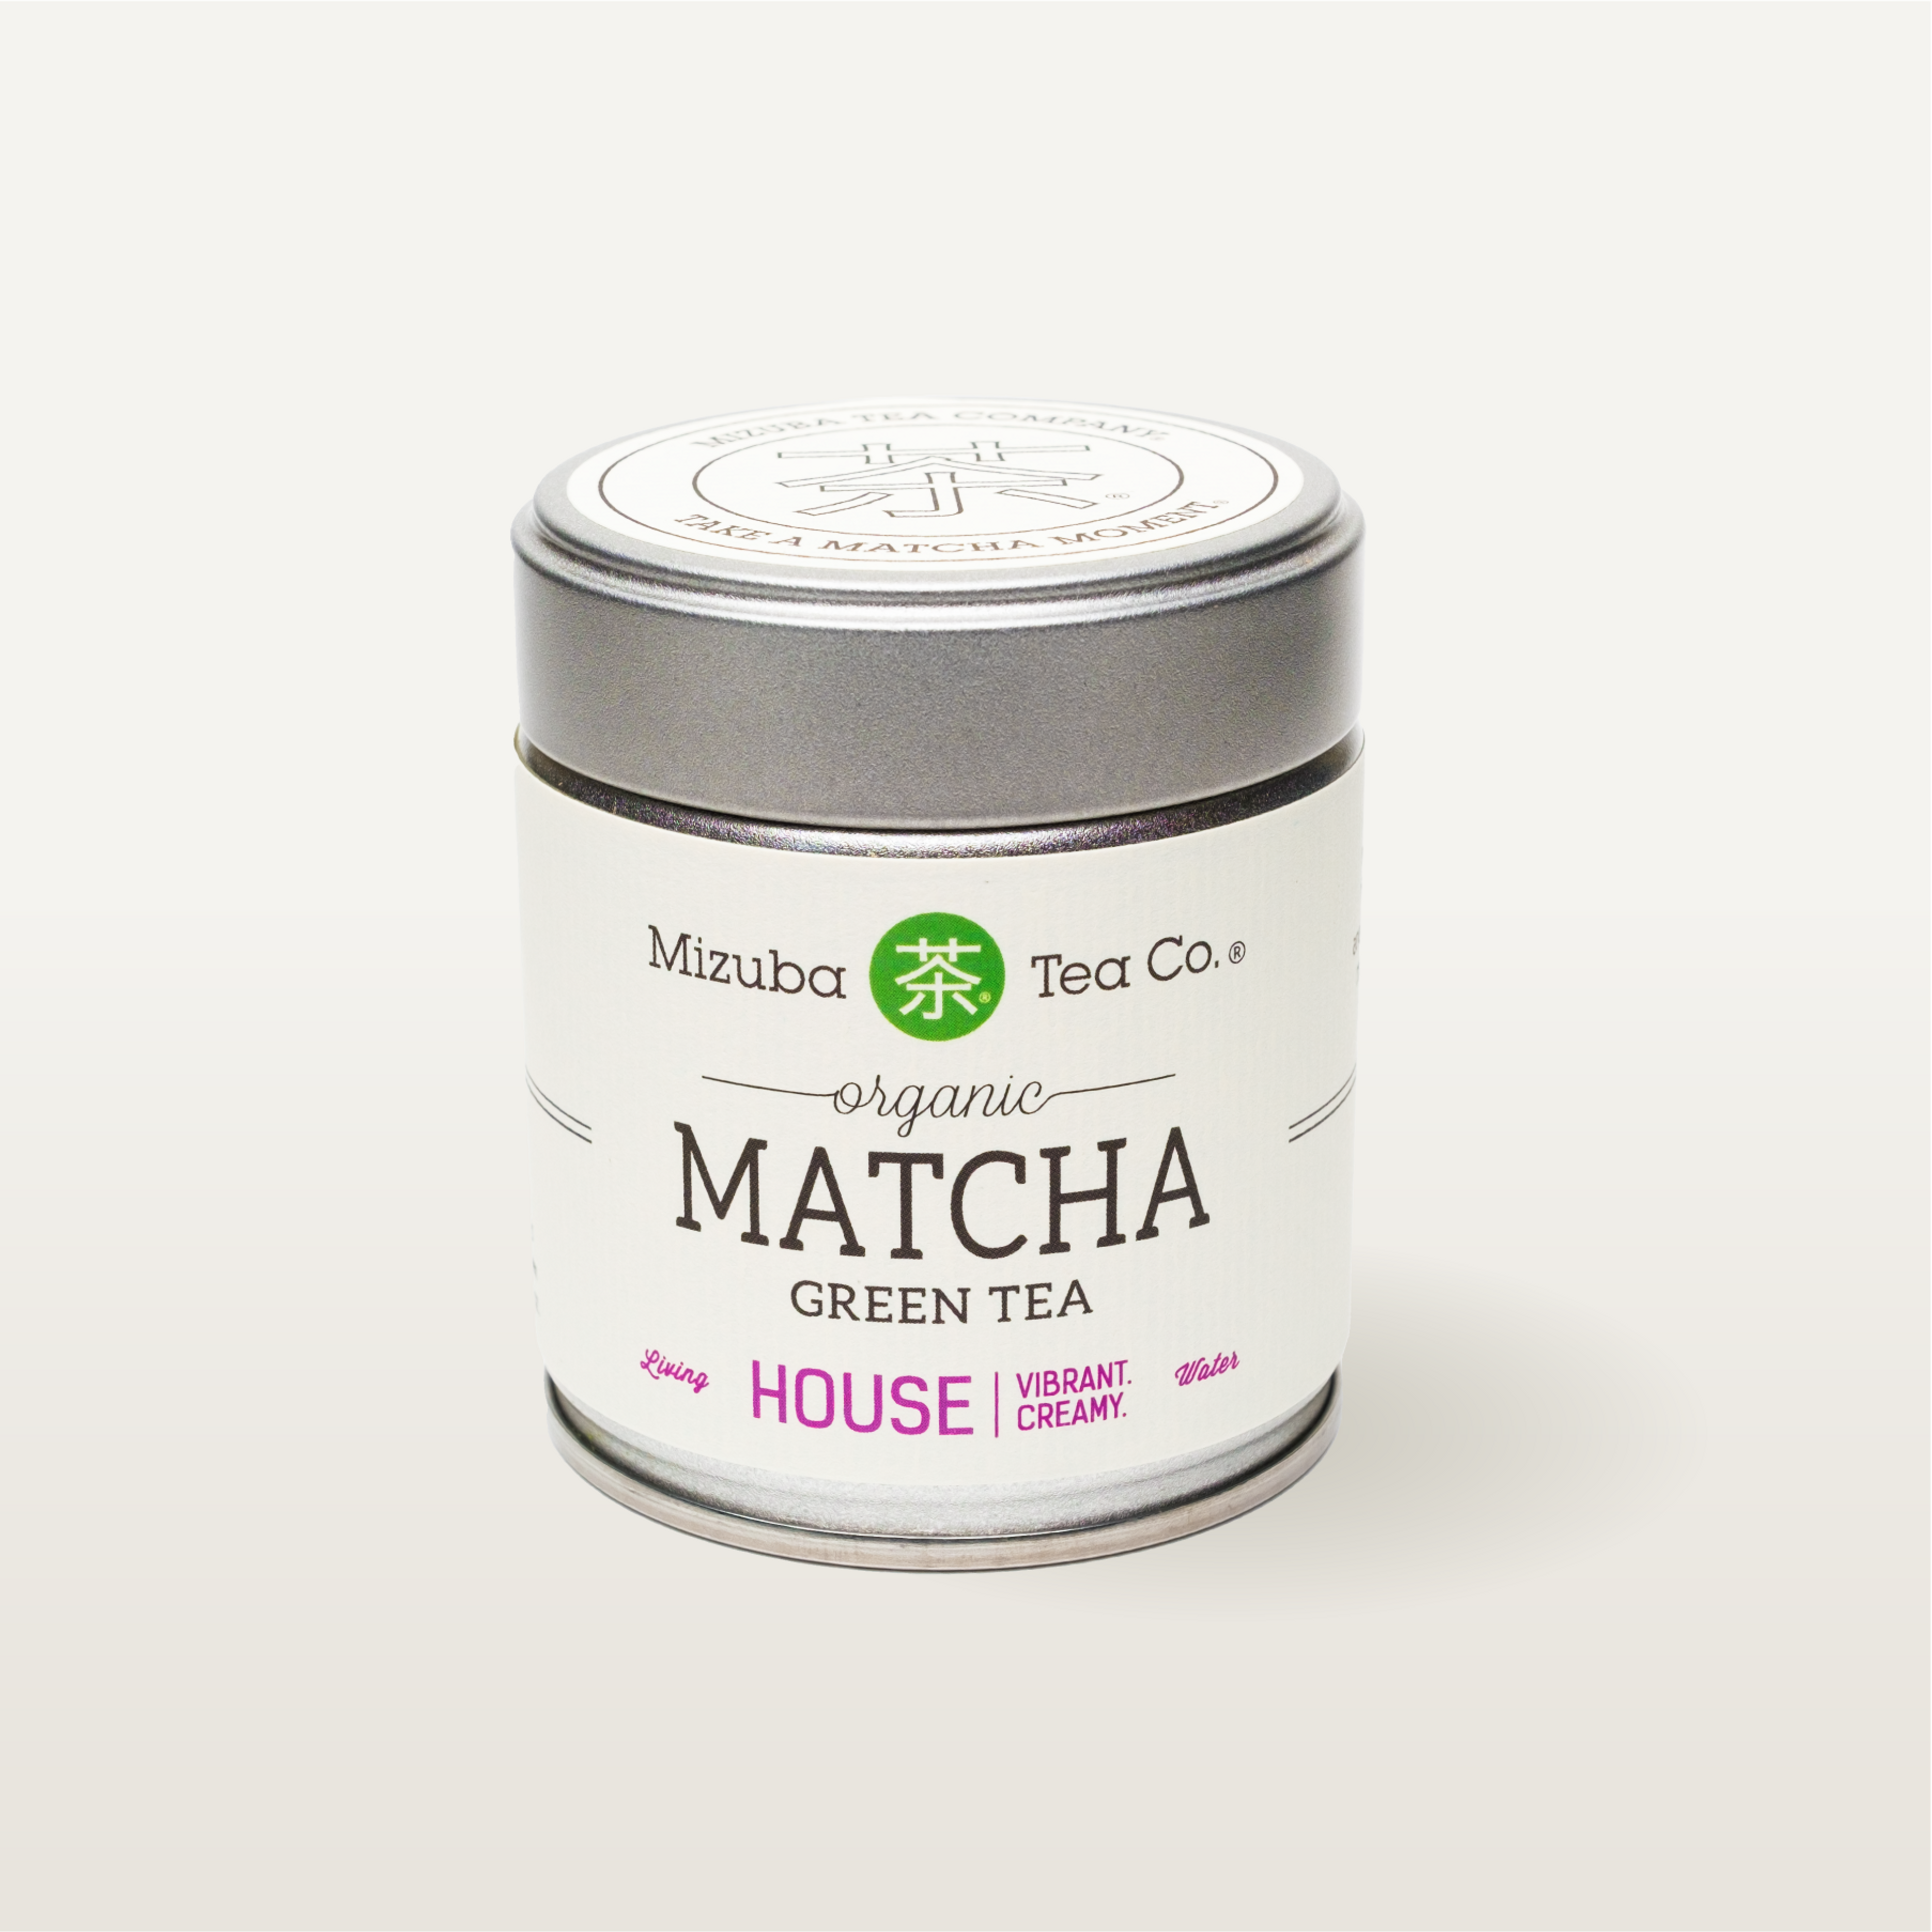 House Organic Matcha Green Tea